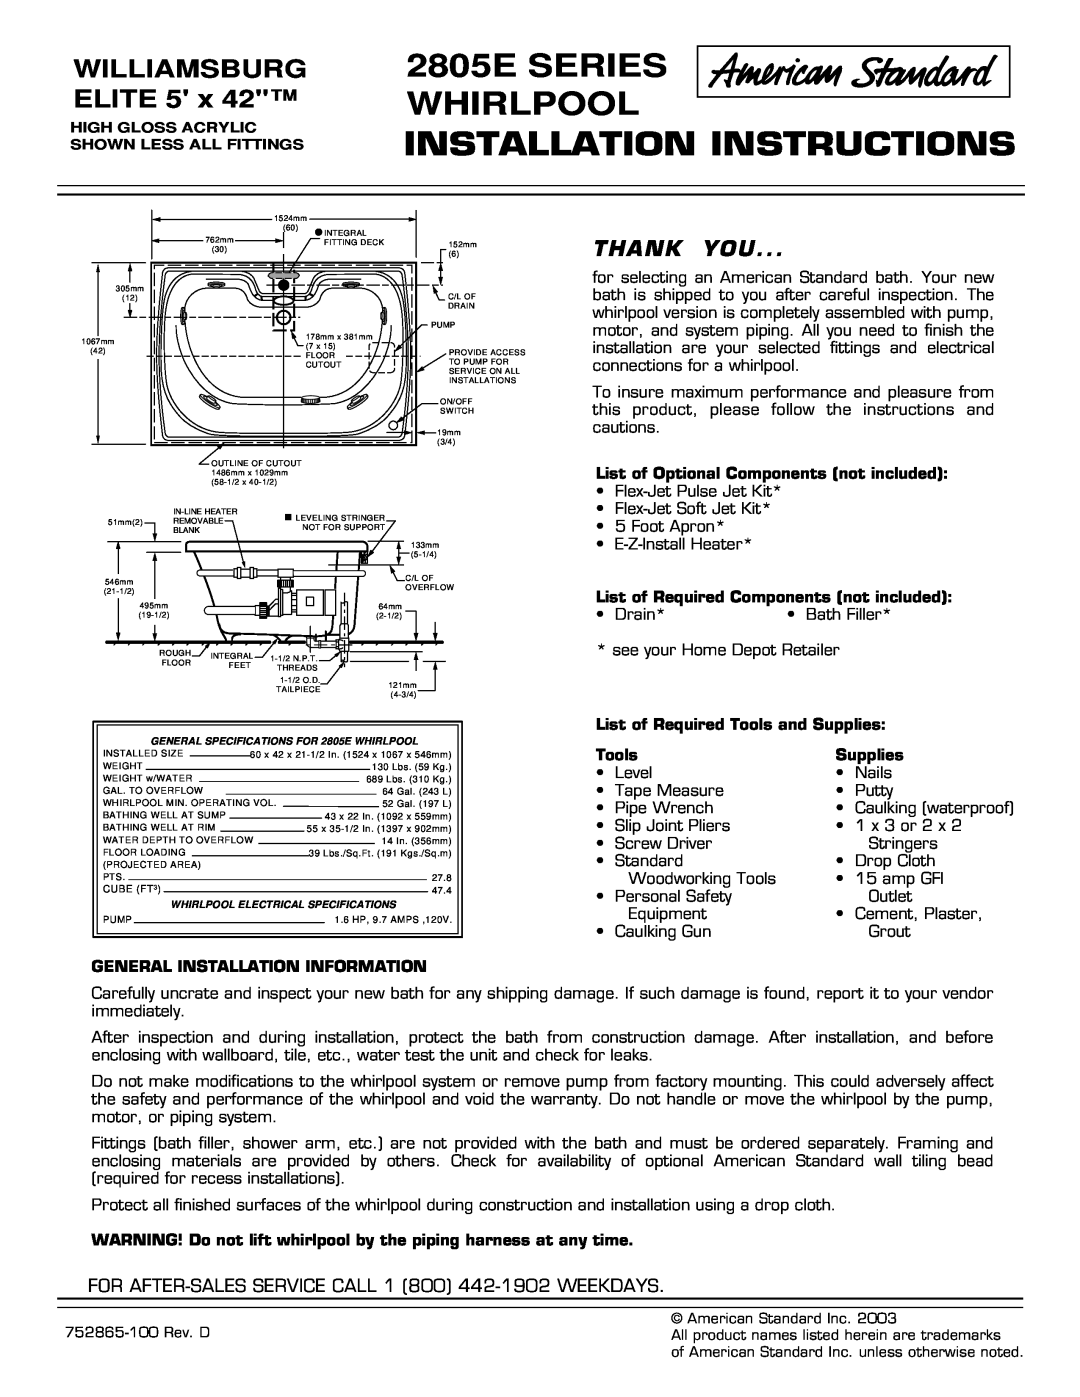 American Standard installation instructions 2805E SERIES WHIRLPOOL, Installation Instructions, WILLIAMSBURG ELITE 5 